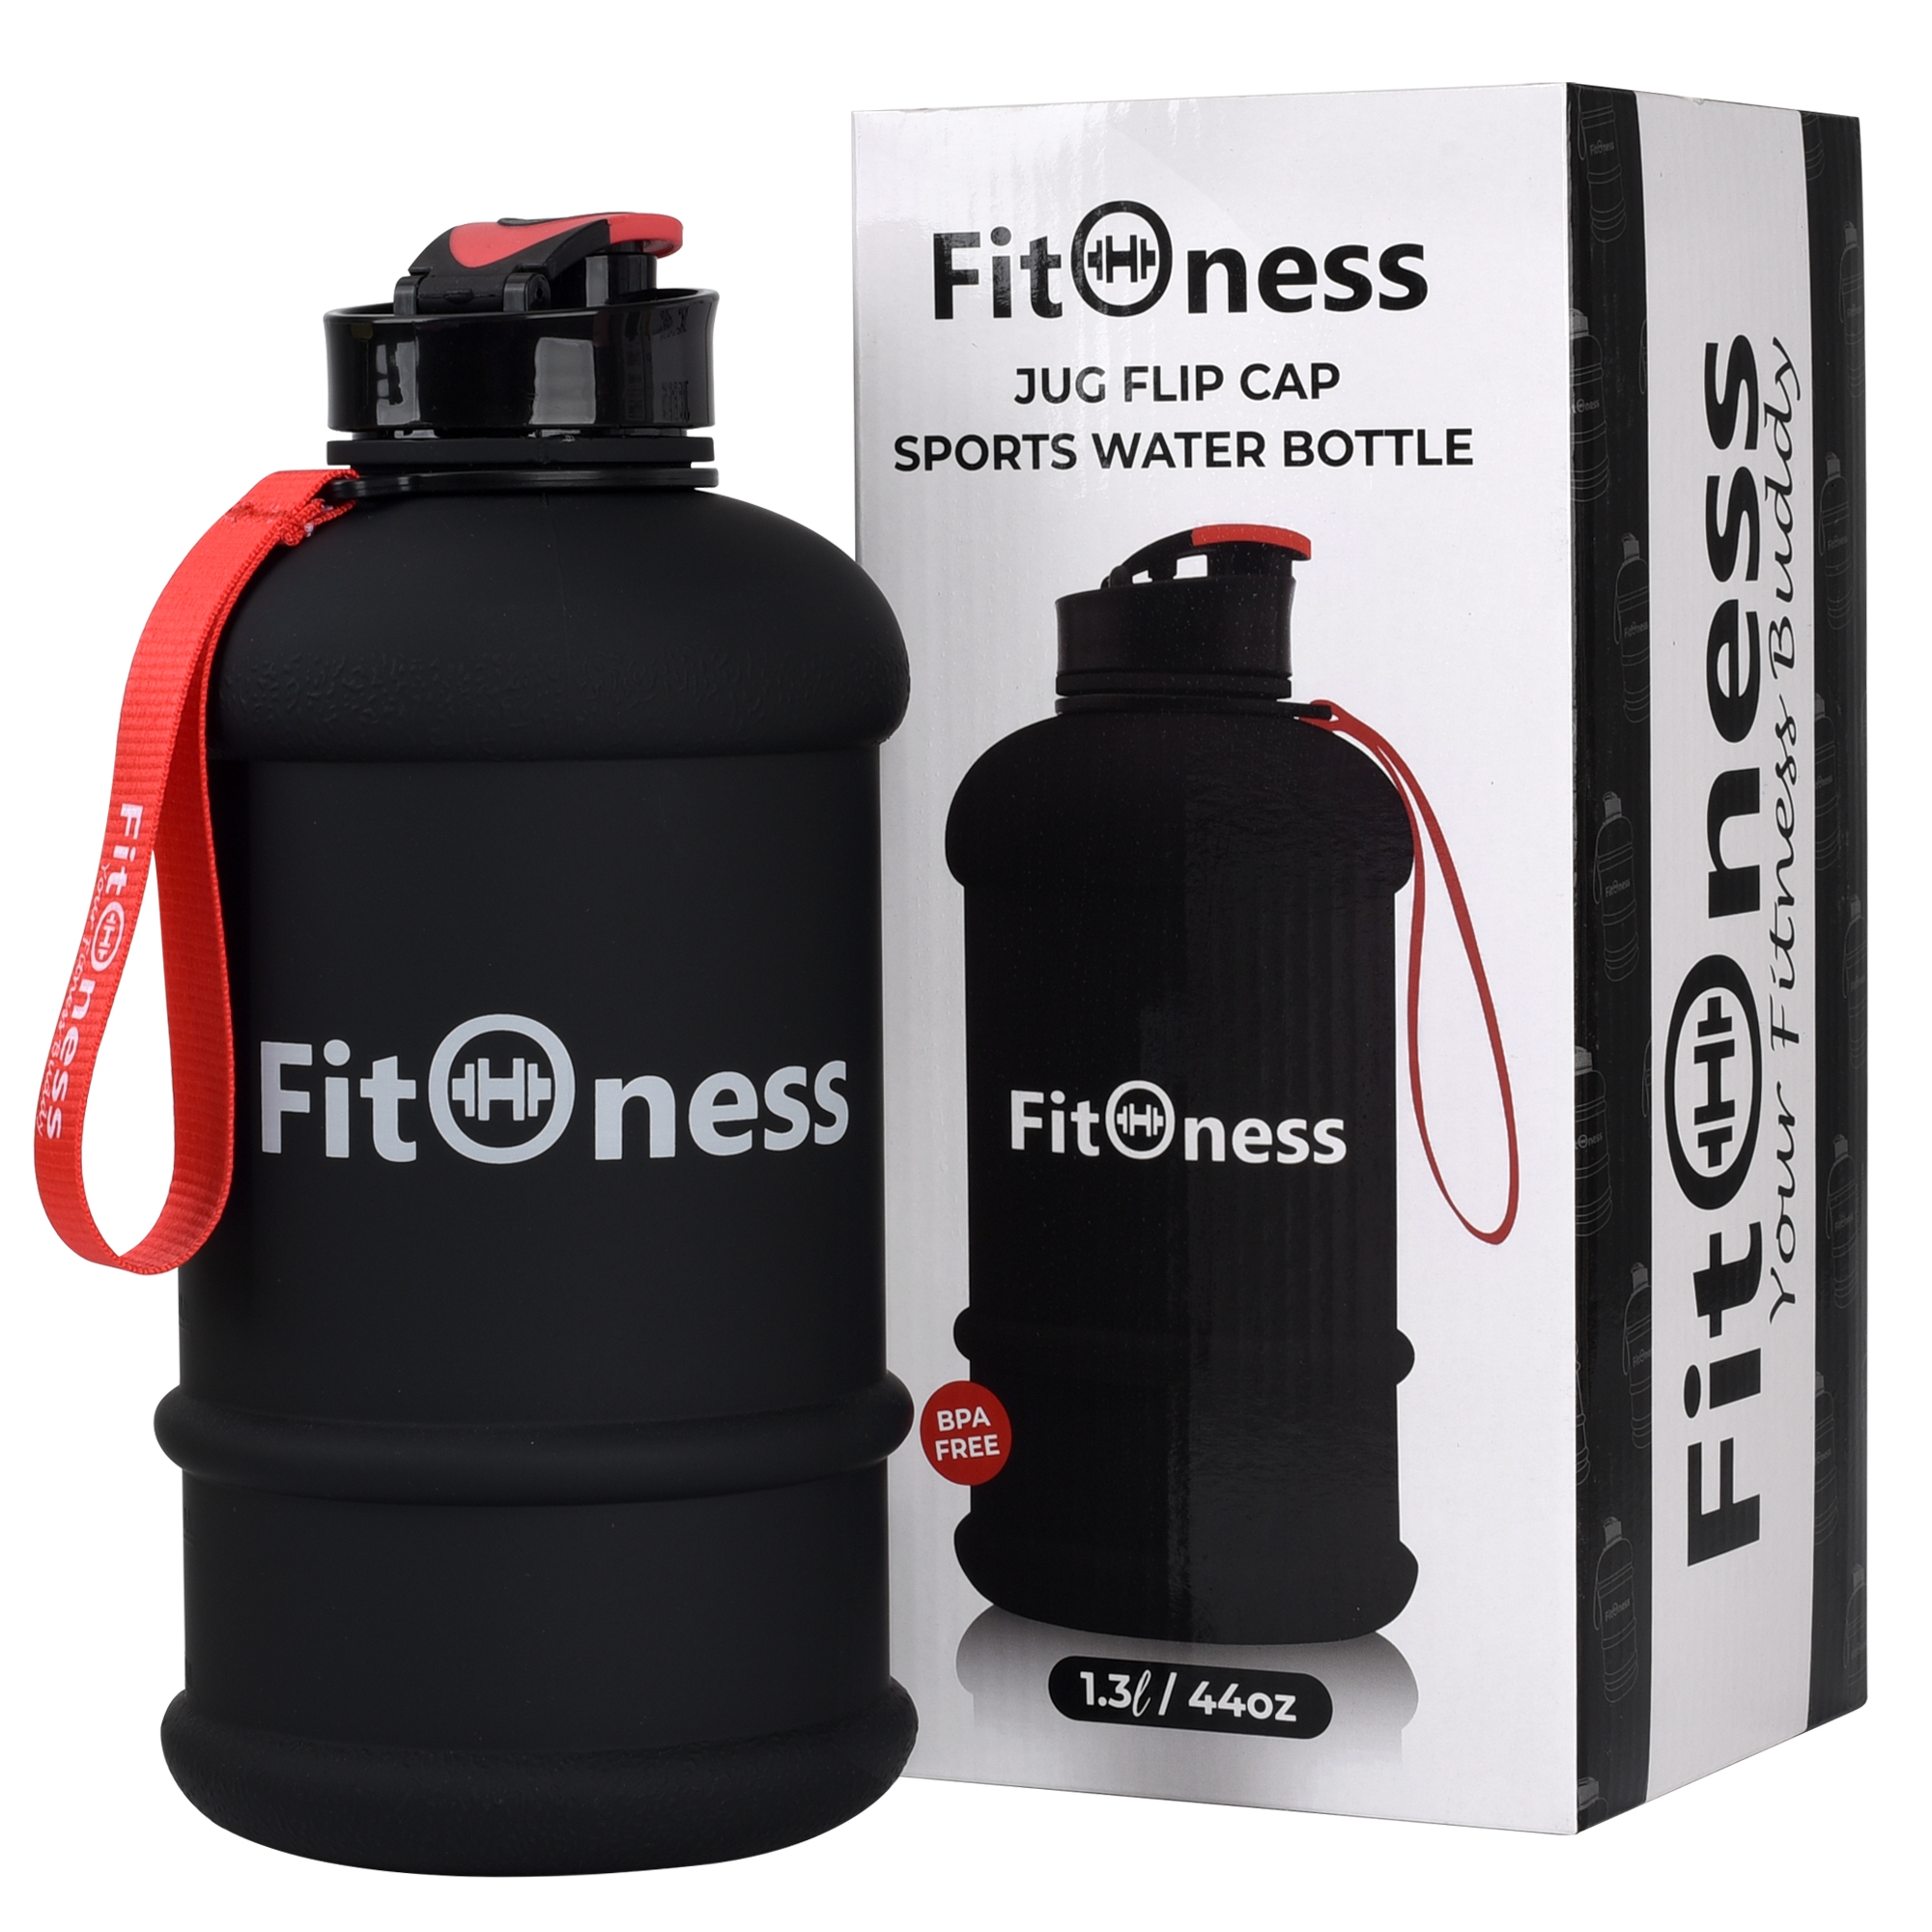 Brand Fitoness Jug Bottle 1.3l / 44oz Black Sports